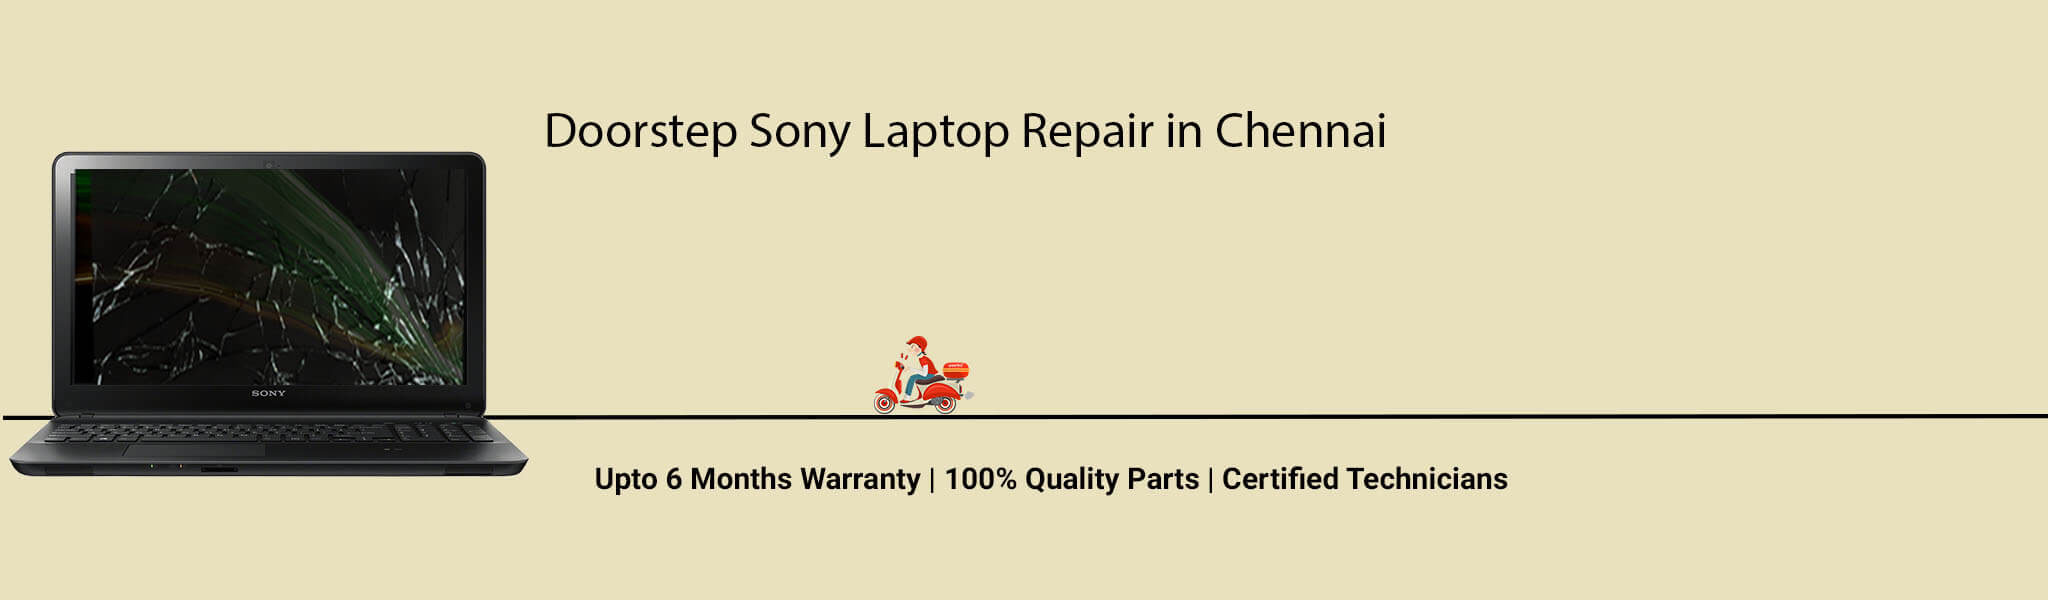 sony-laptop-banner-chennai.jpg